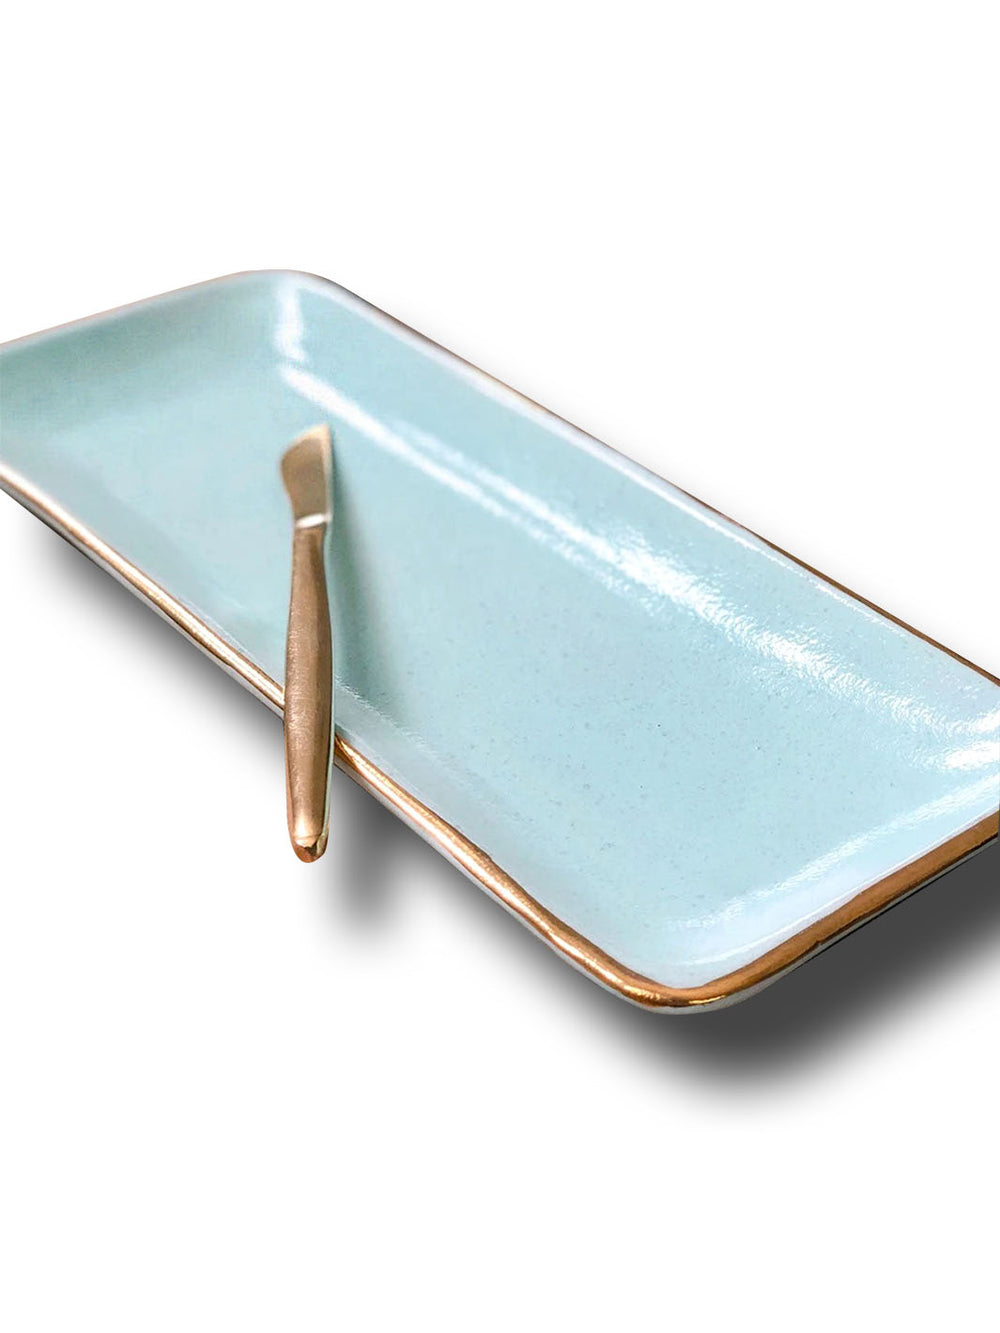 Elegant Handcrafted Aquatic Royalty Rectangular Ceramic Serving Platter Deco Serving Platters DCB0027-1